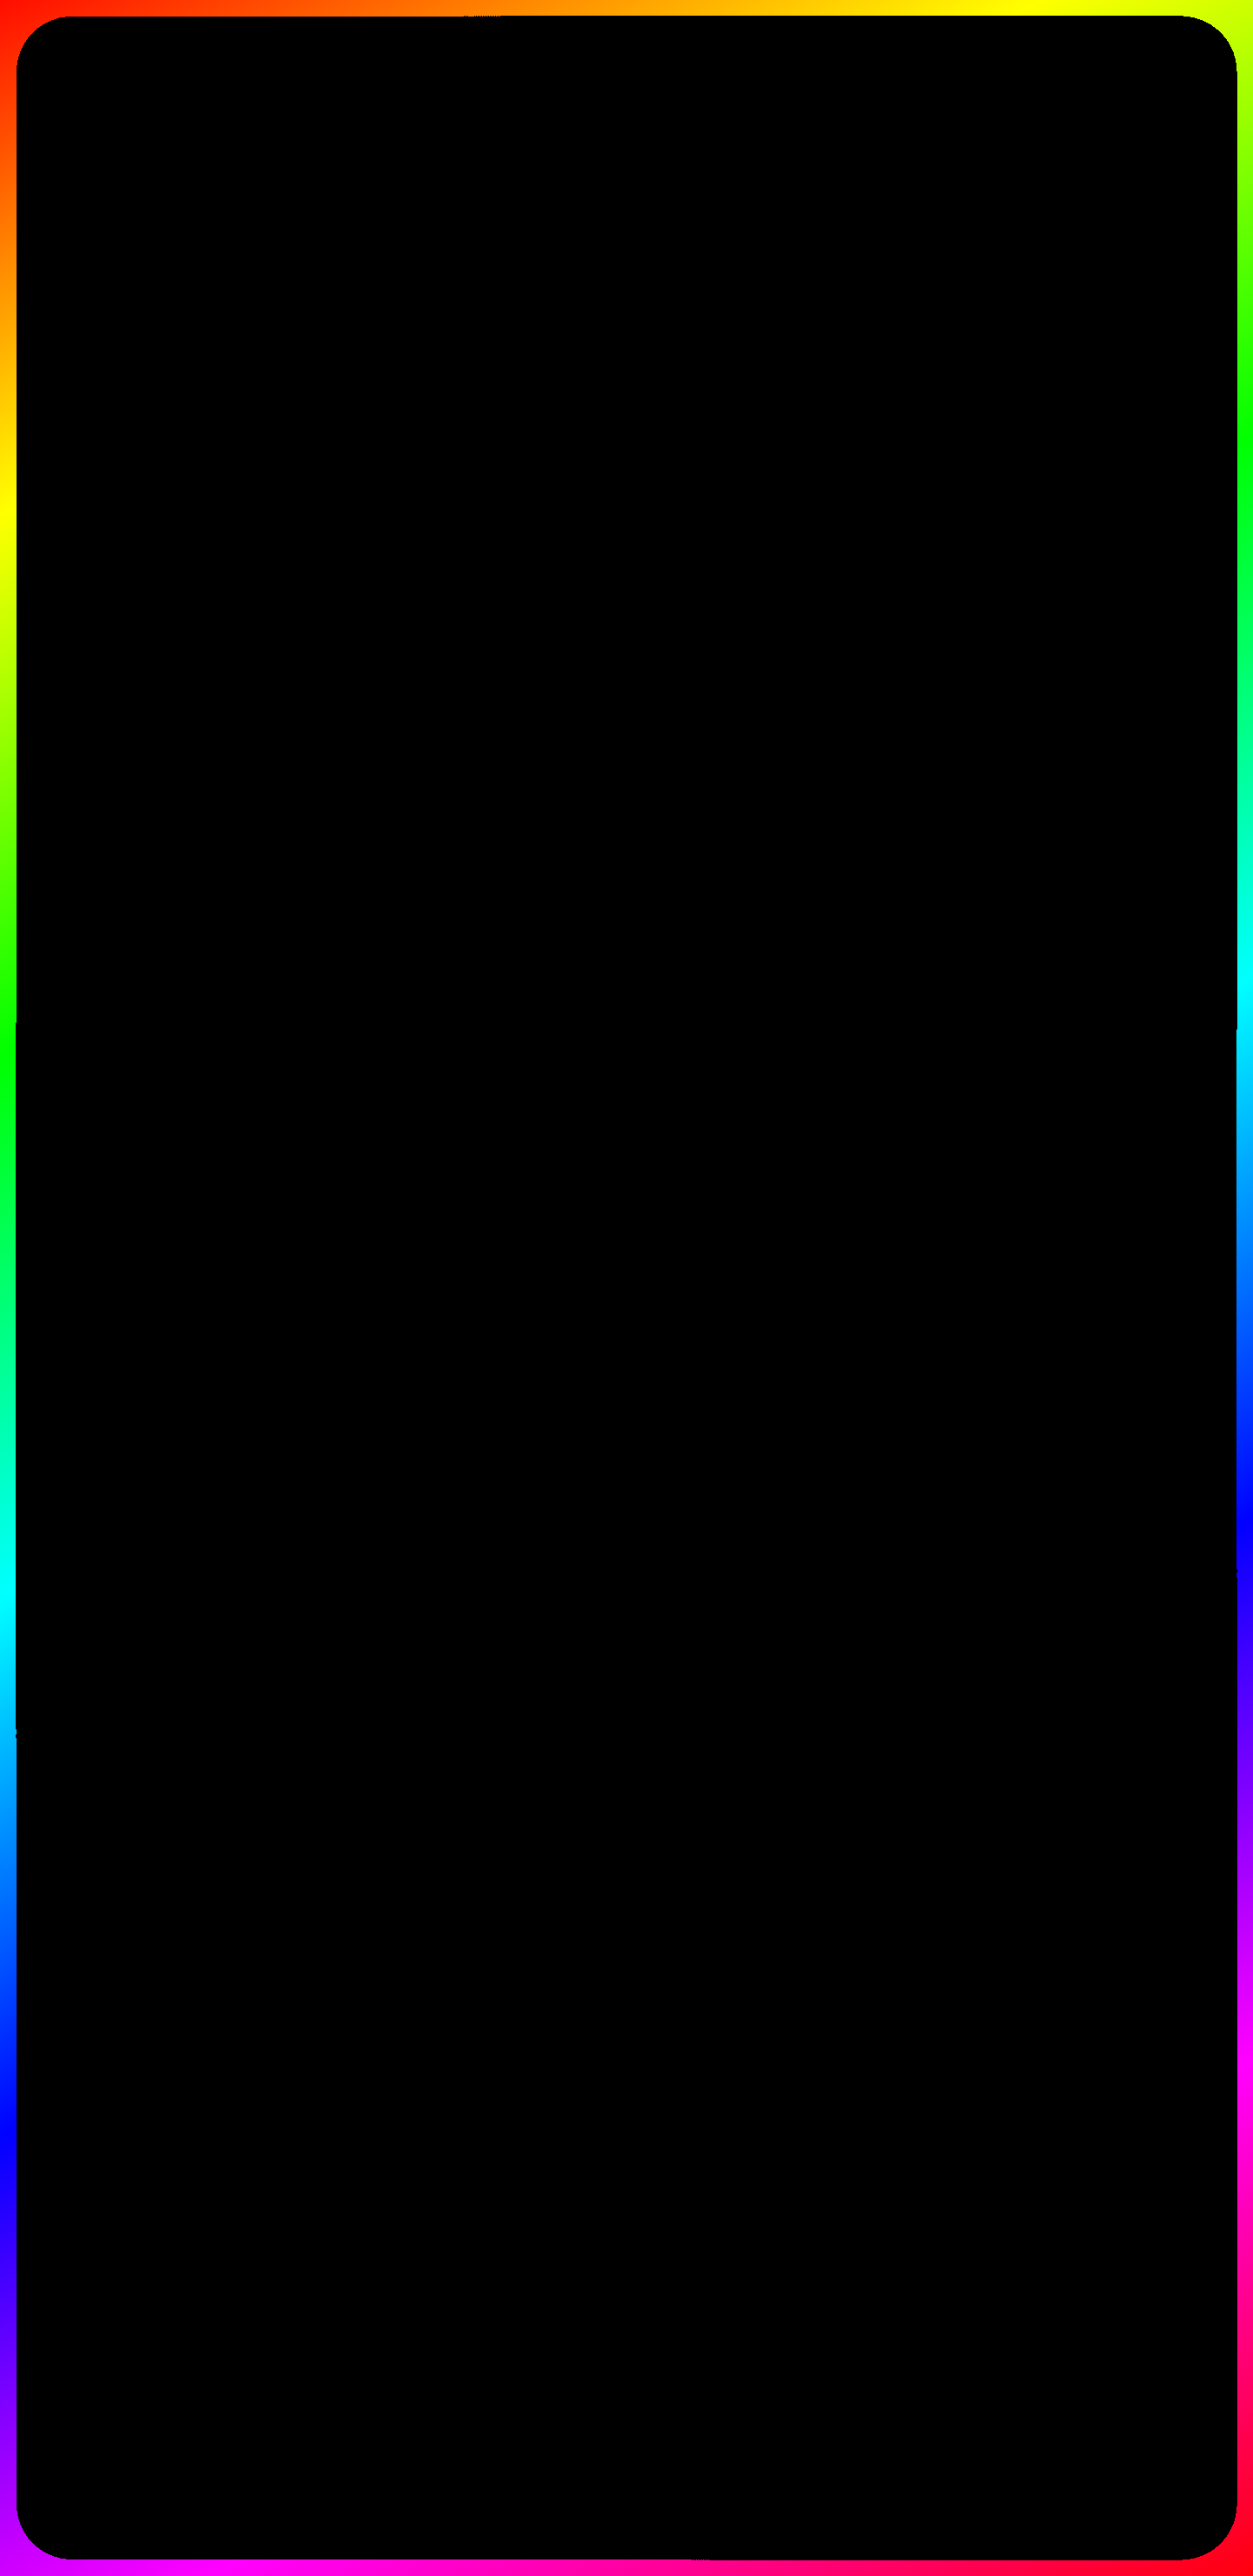 iPhone 7 Rainbow Blueprint by suvrat29 on DeviantArt